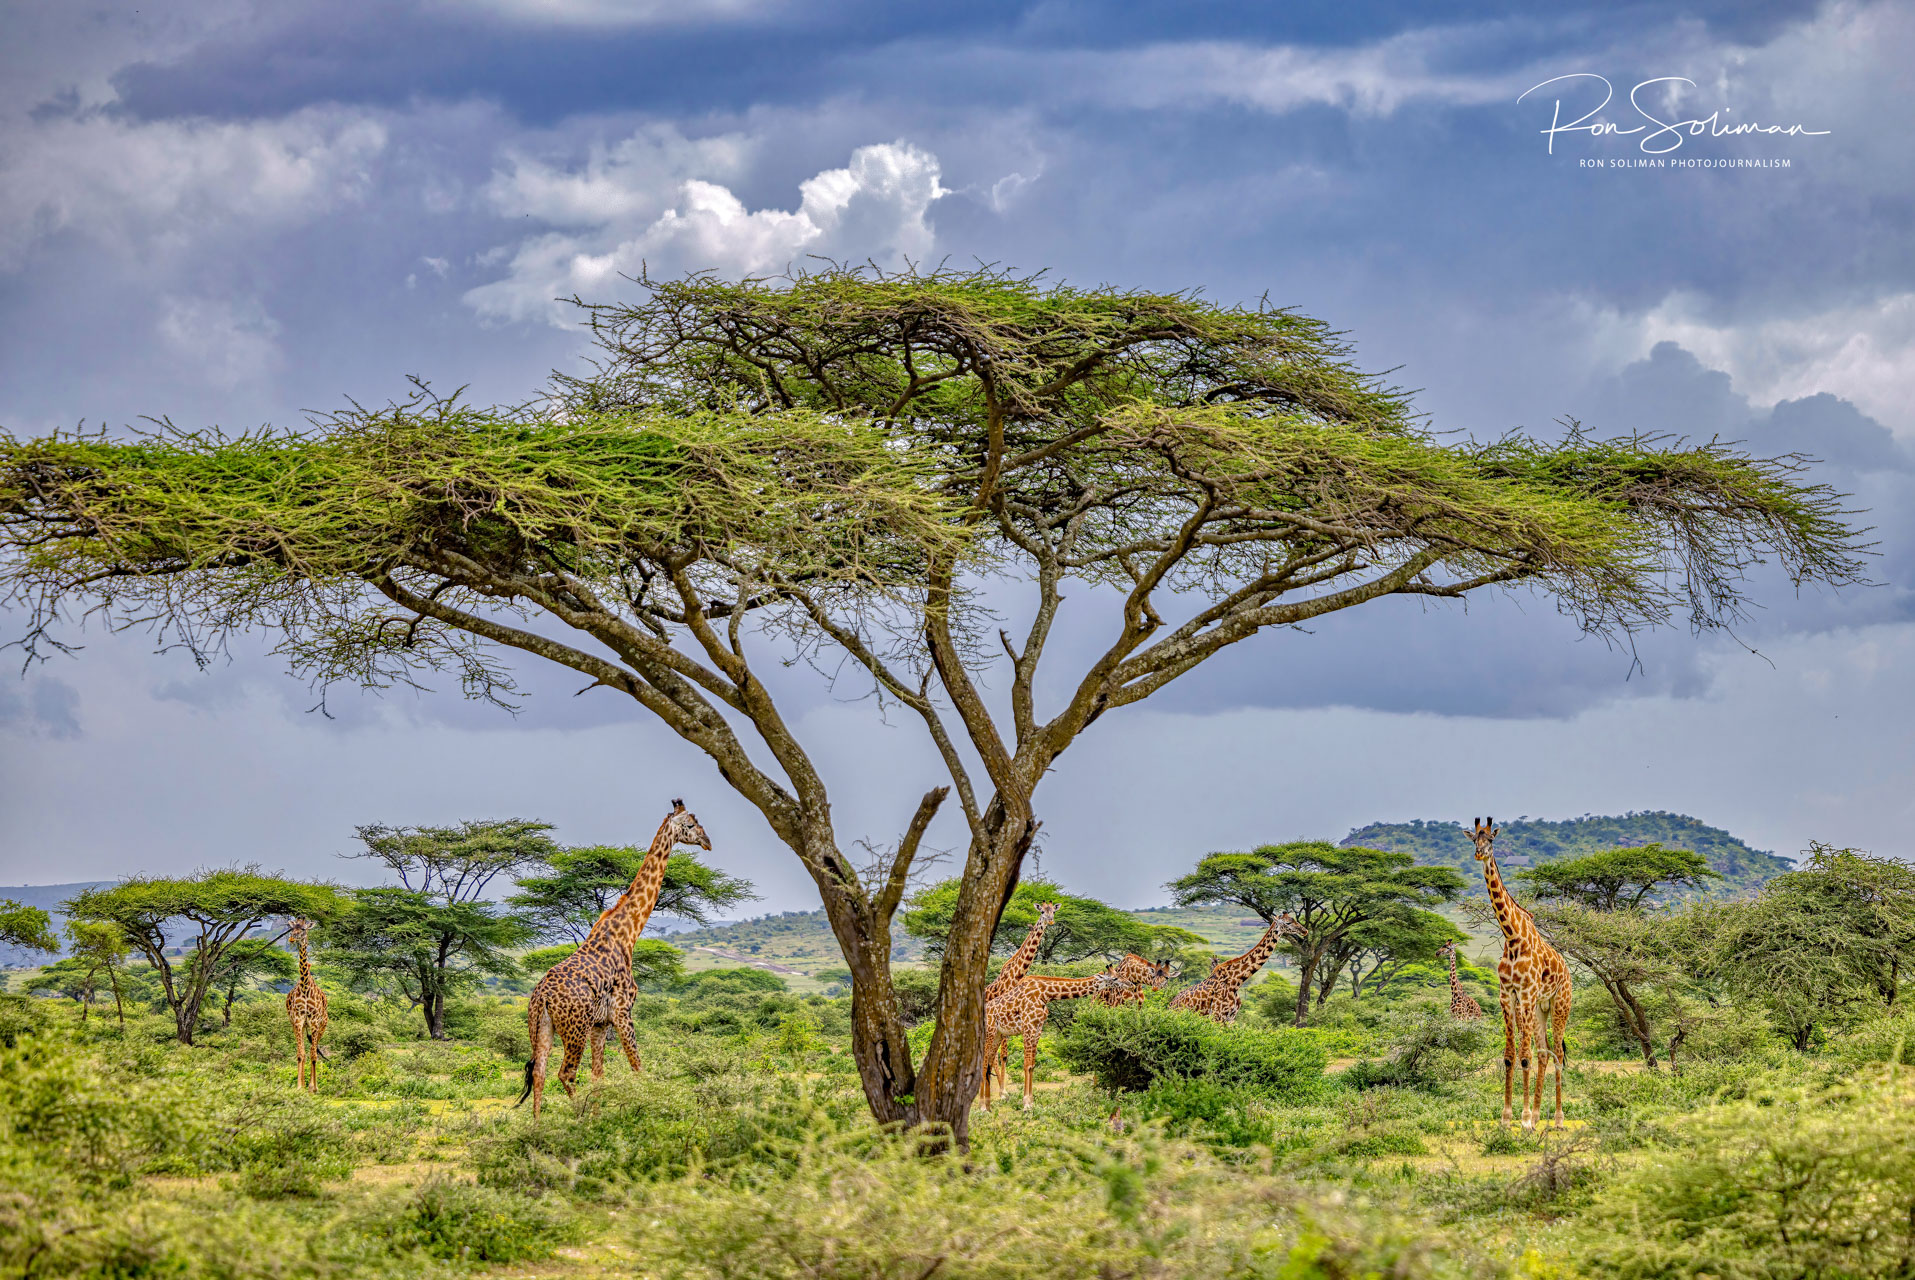 TANZANIA AFRICA GIRAFFES - Best Earth Day photos